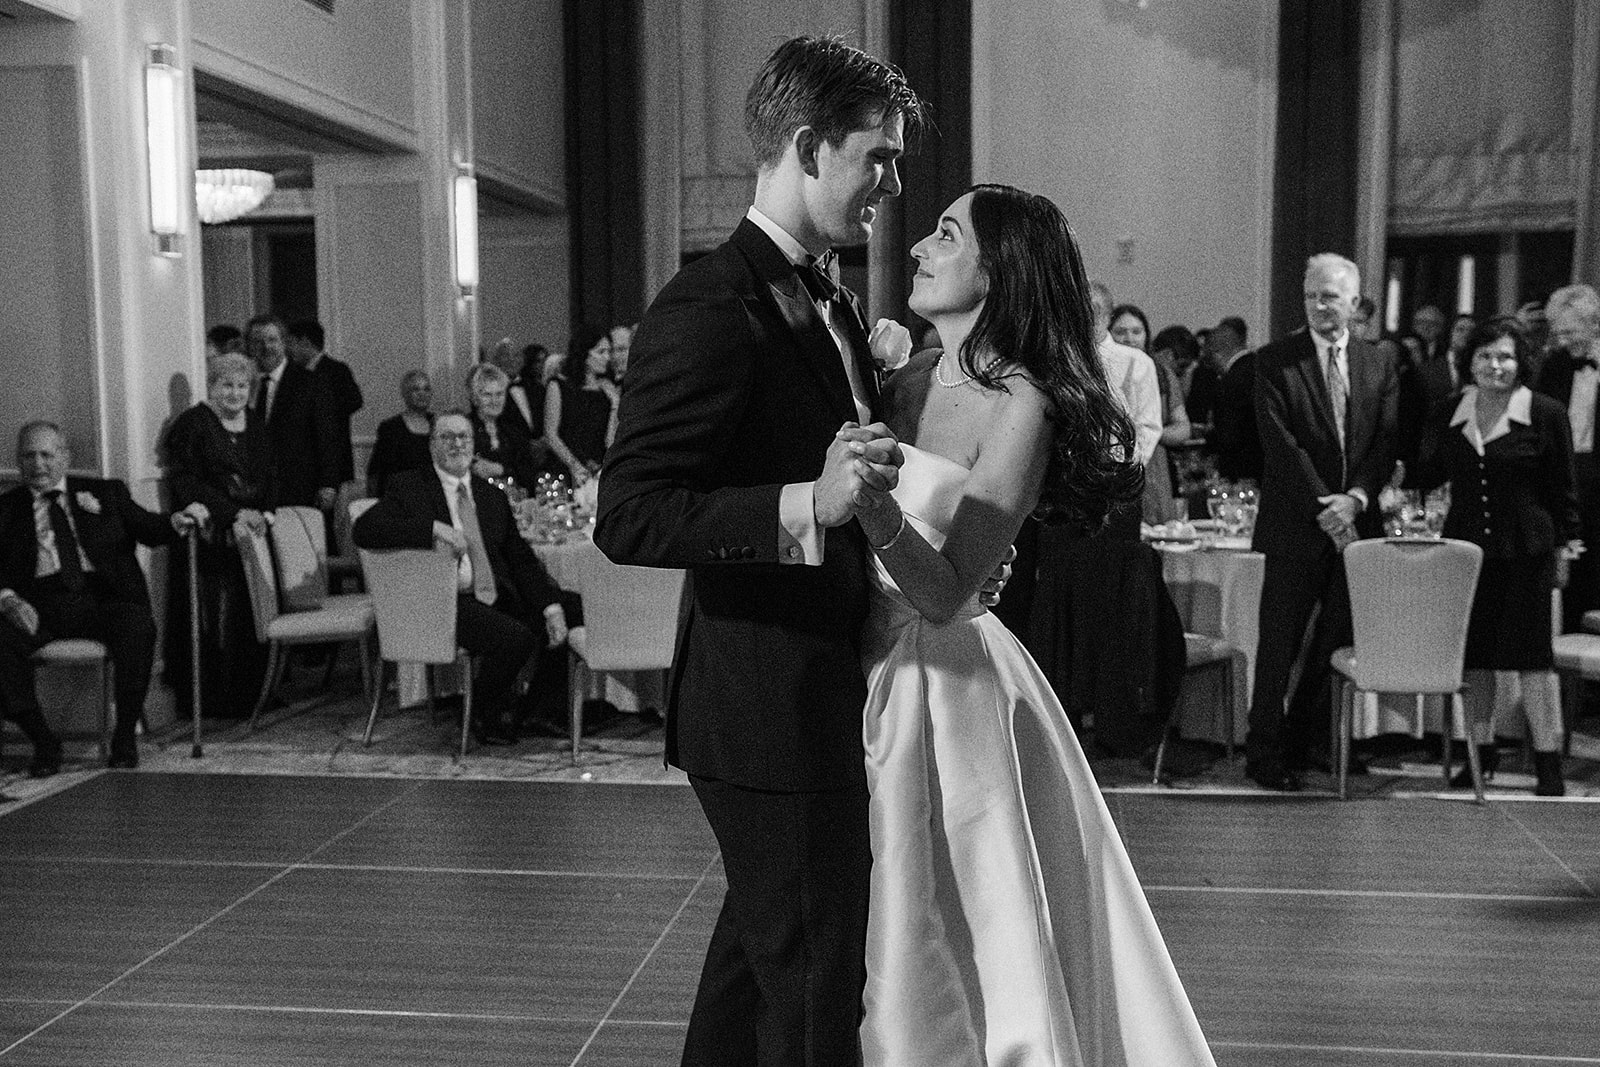 The Newbury Boston Wedding reception ballroom Assembly room first dance